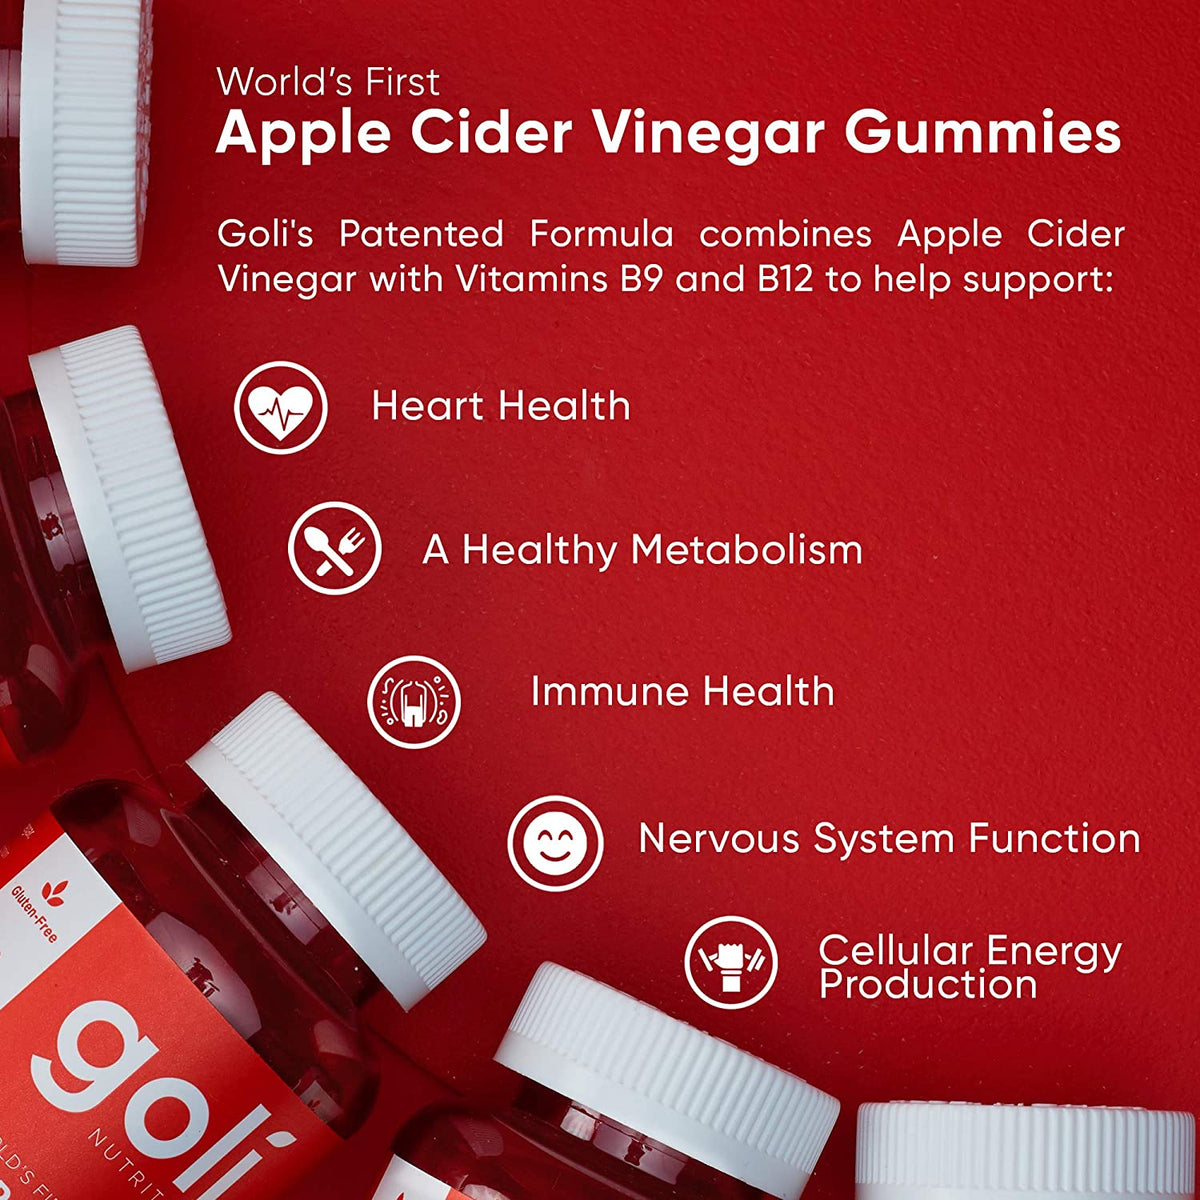 Goli Nutrition - Apple Cider Vinegar Gummy 60ct